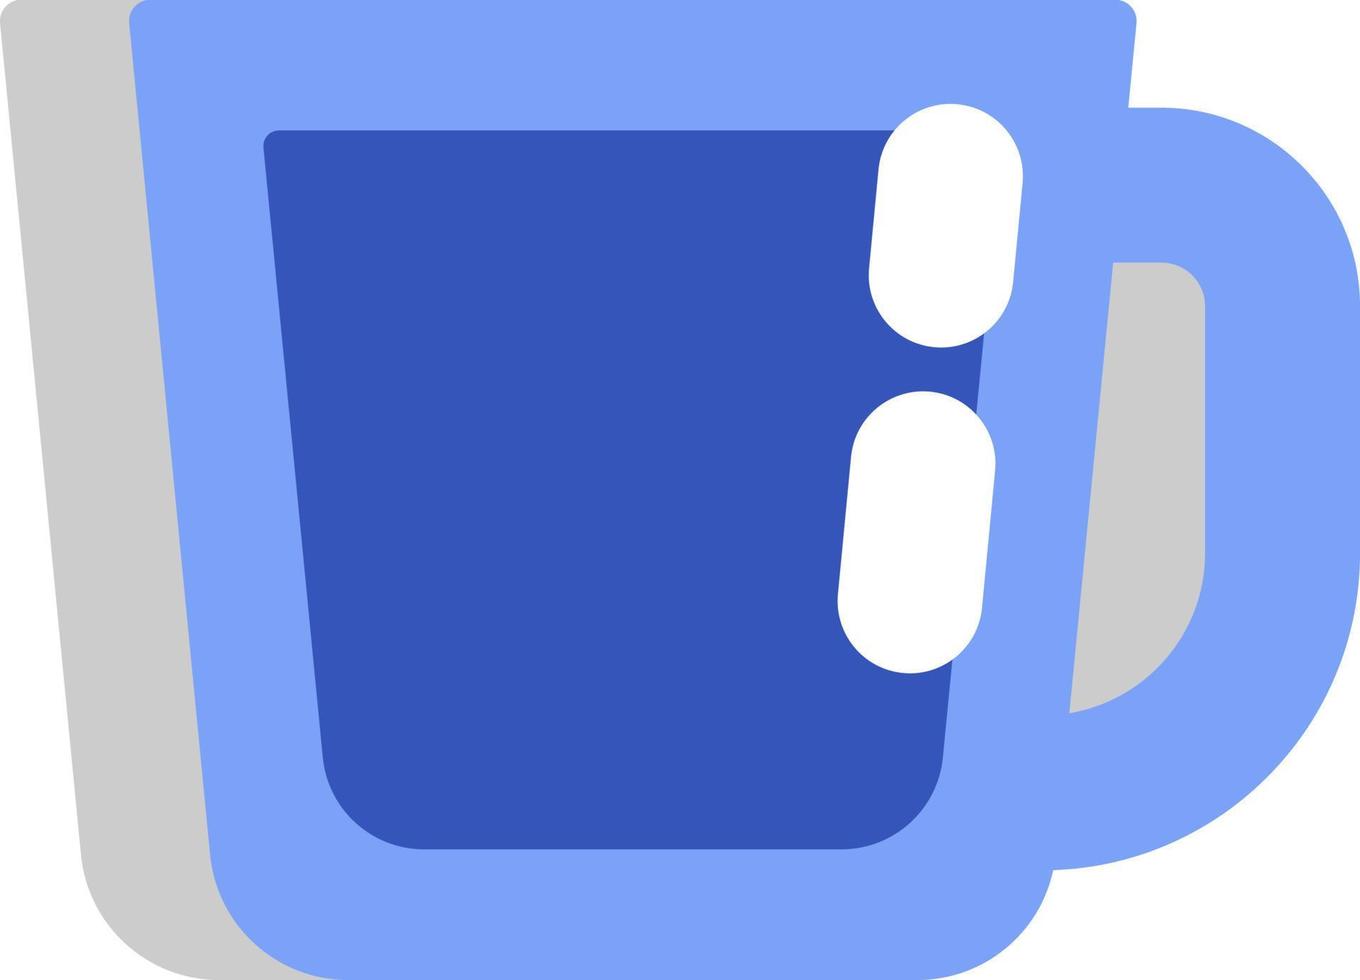 Hot winter tea, illustration, vector on a white background.